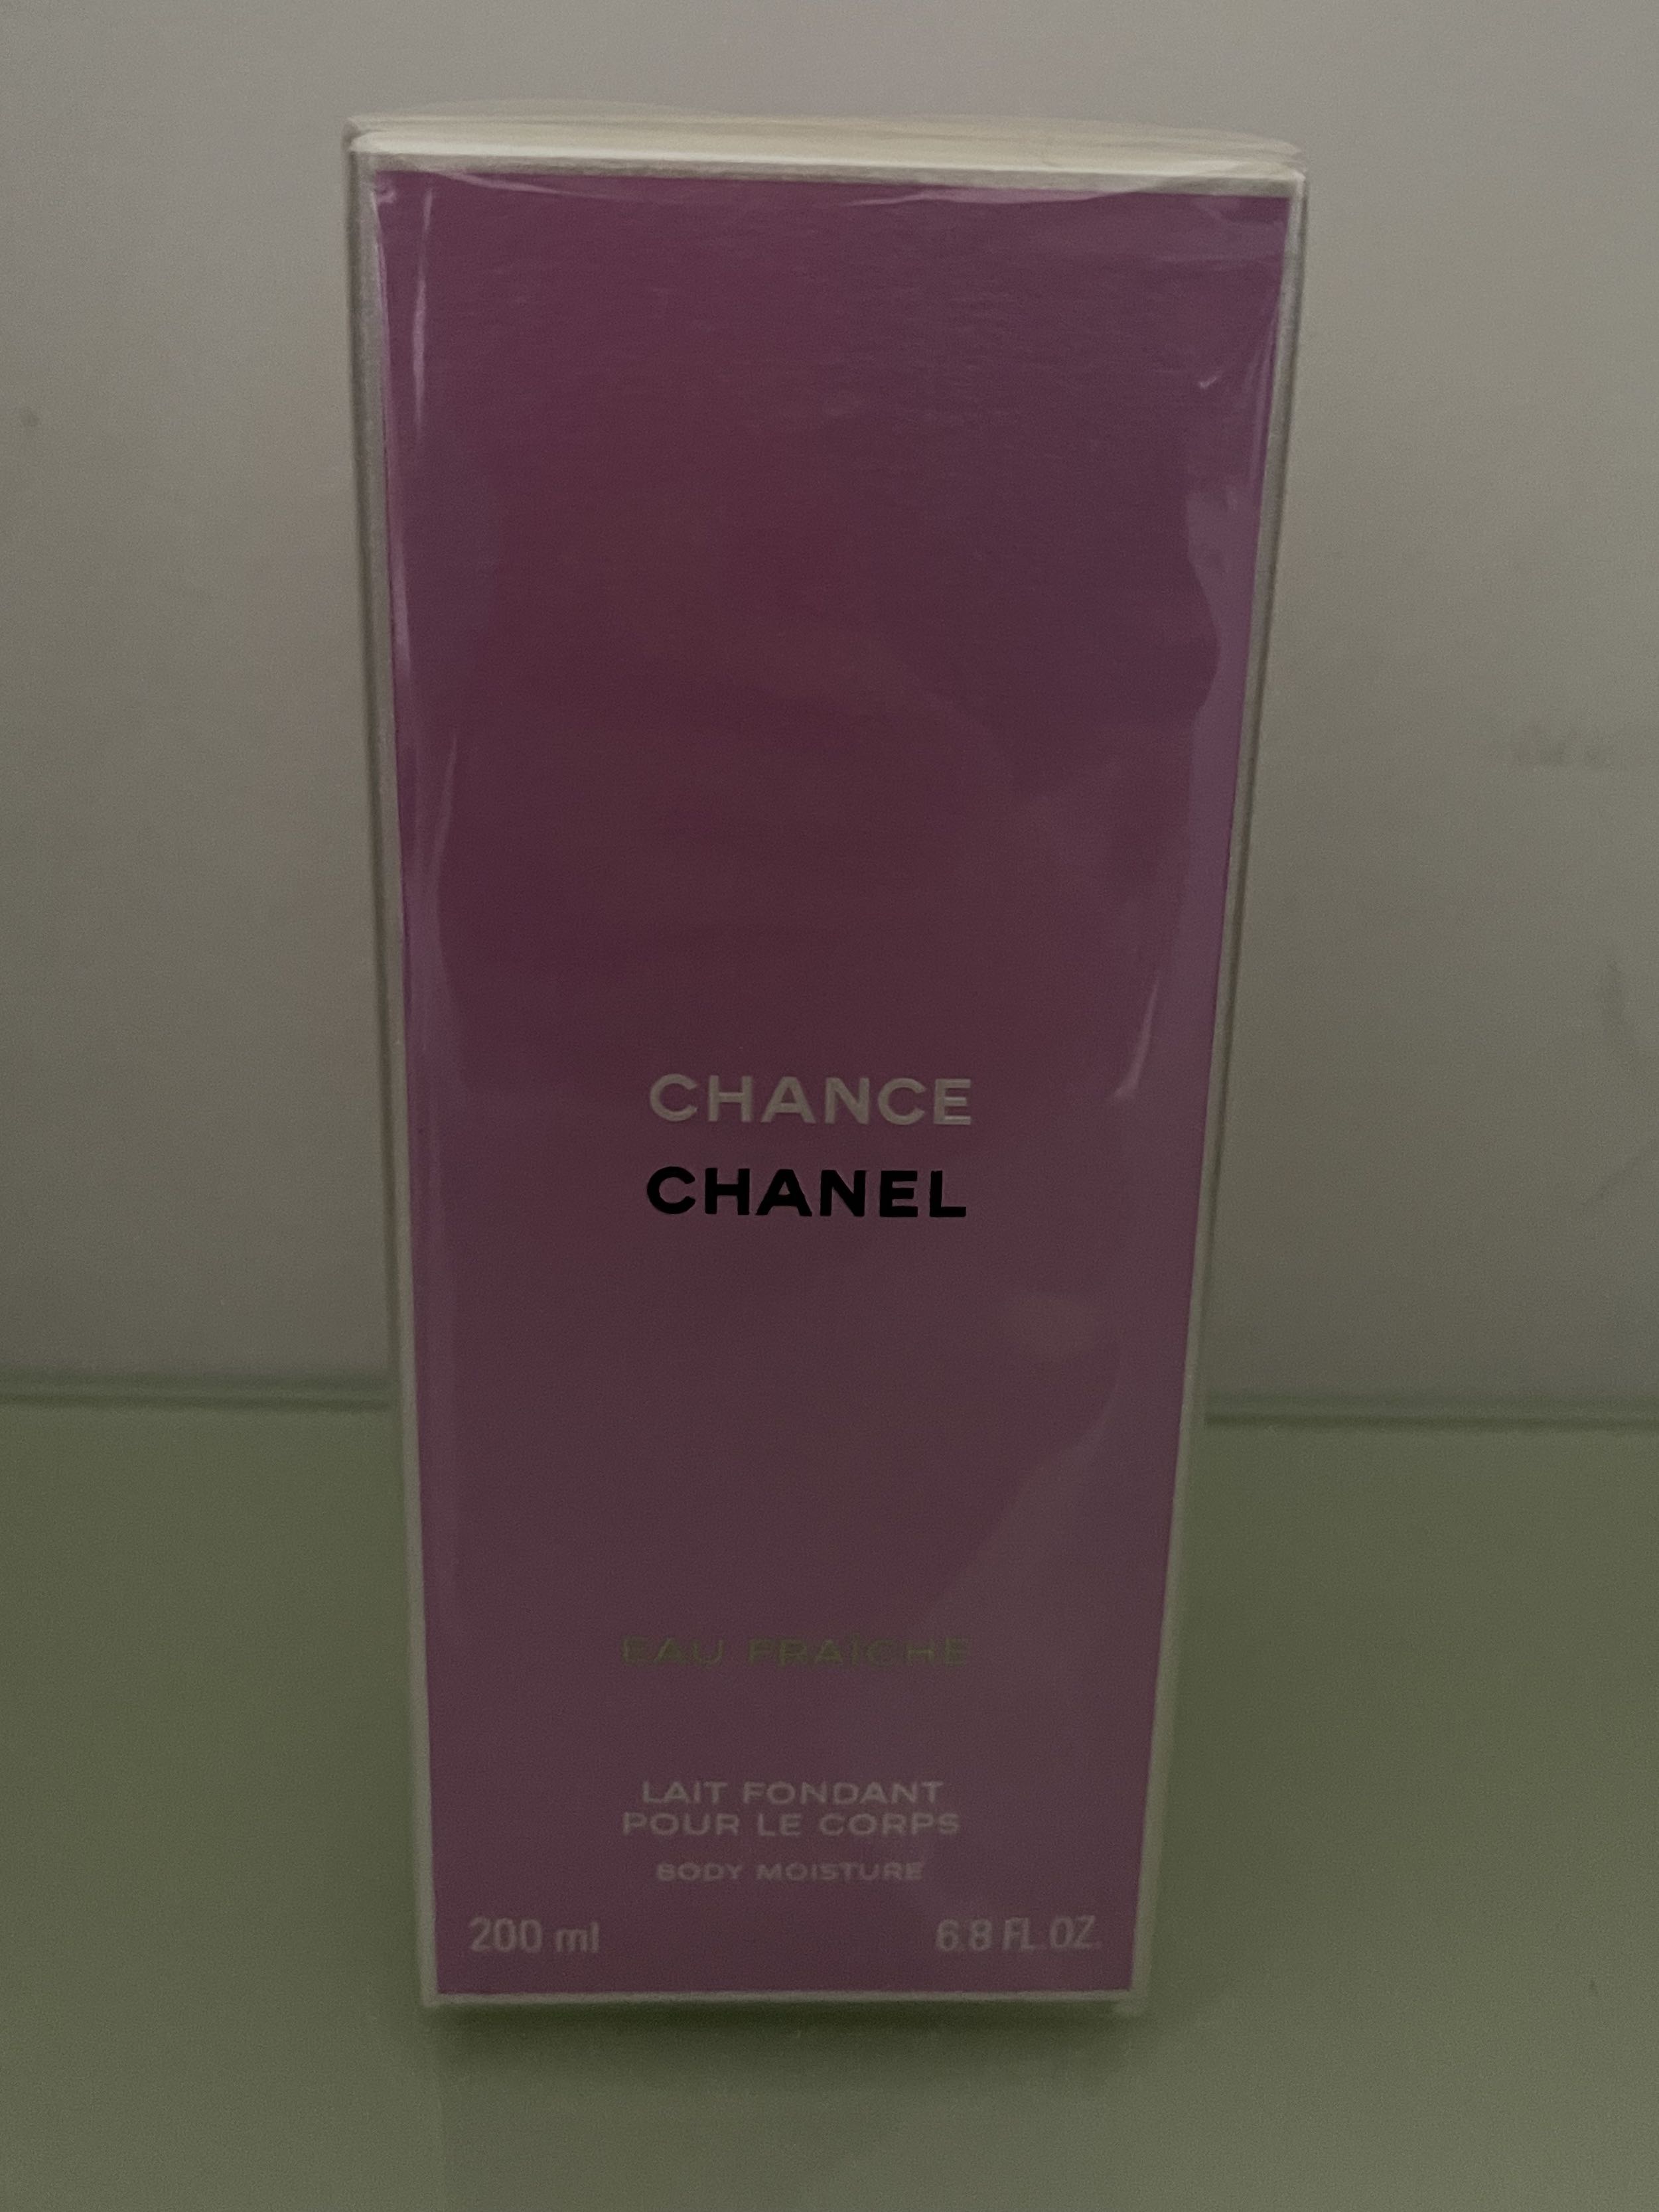 Chanel - CHANCE EAU FRAÎCHE - Moisturizing Body Cream - Luxury